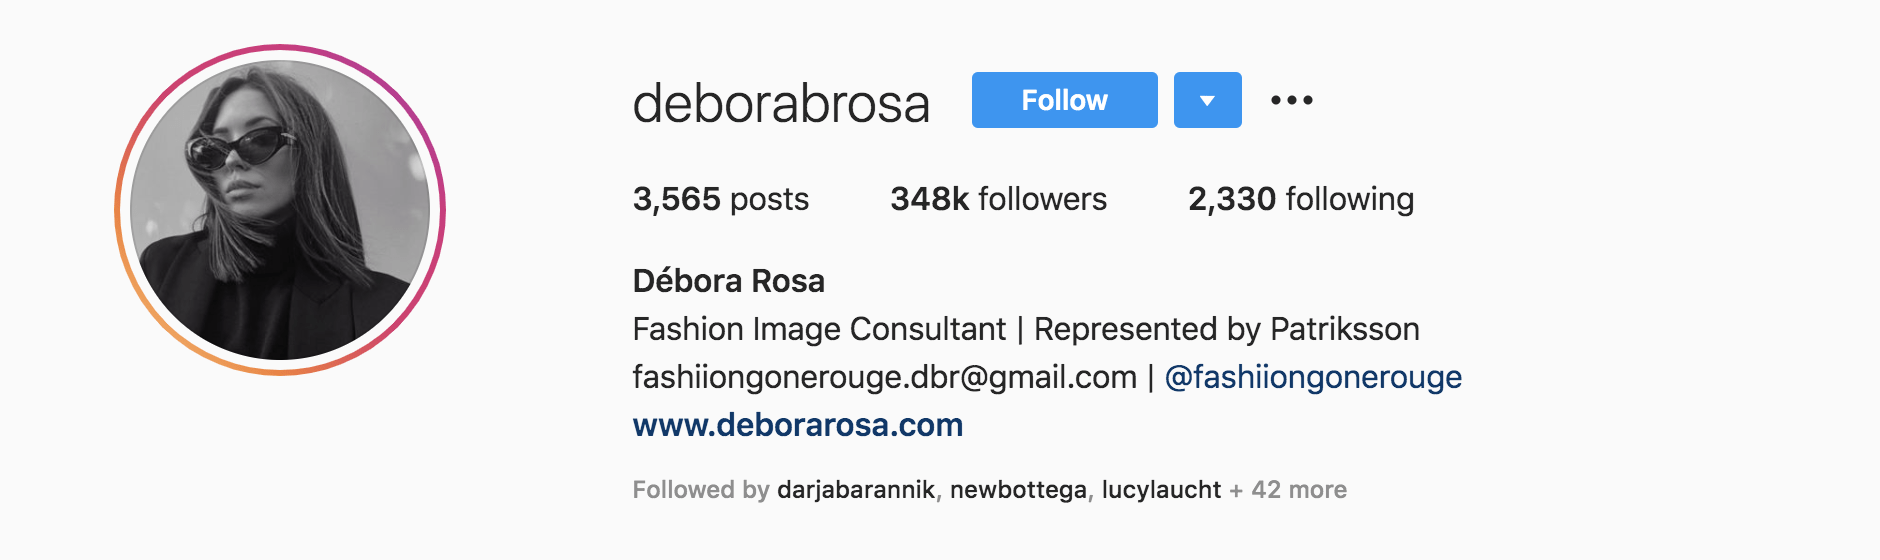 Top Fashion Influencers - Debora Rosa